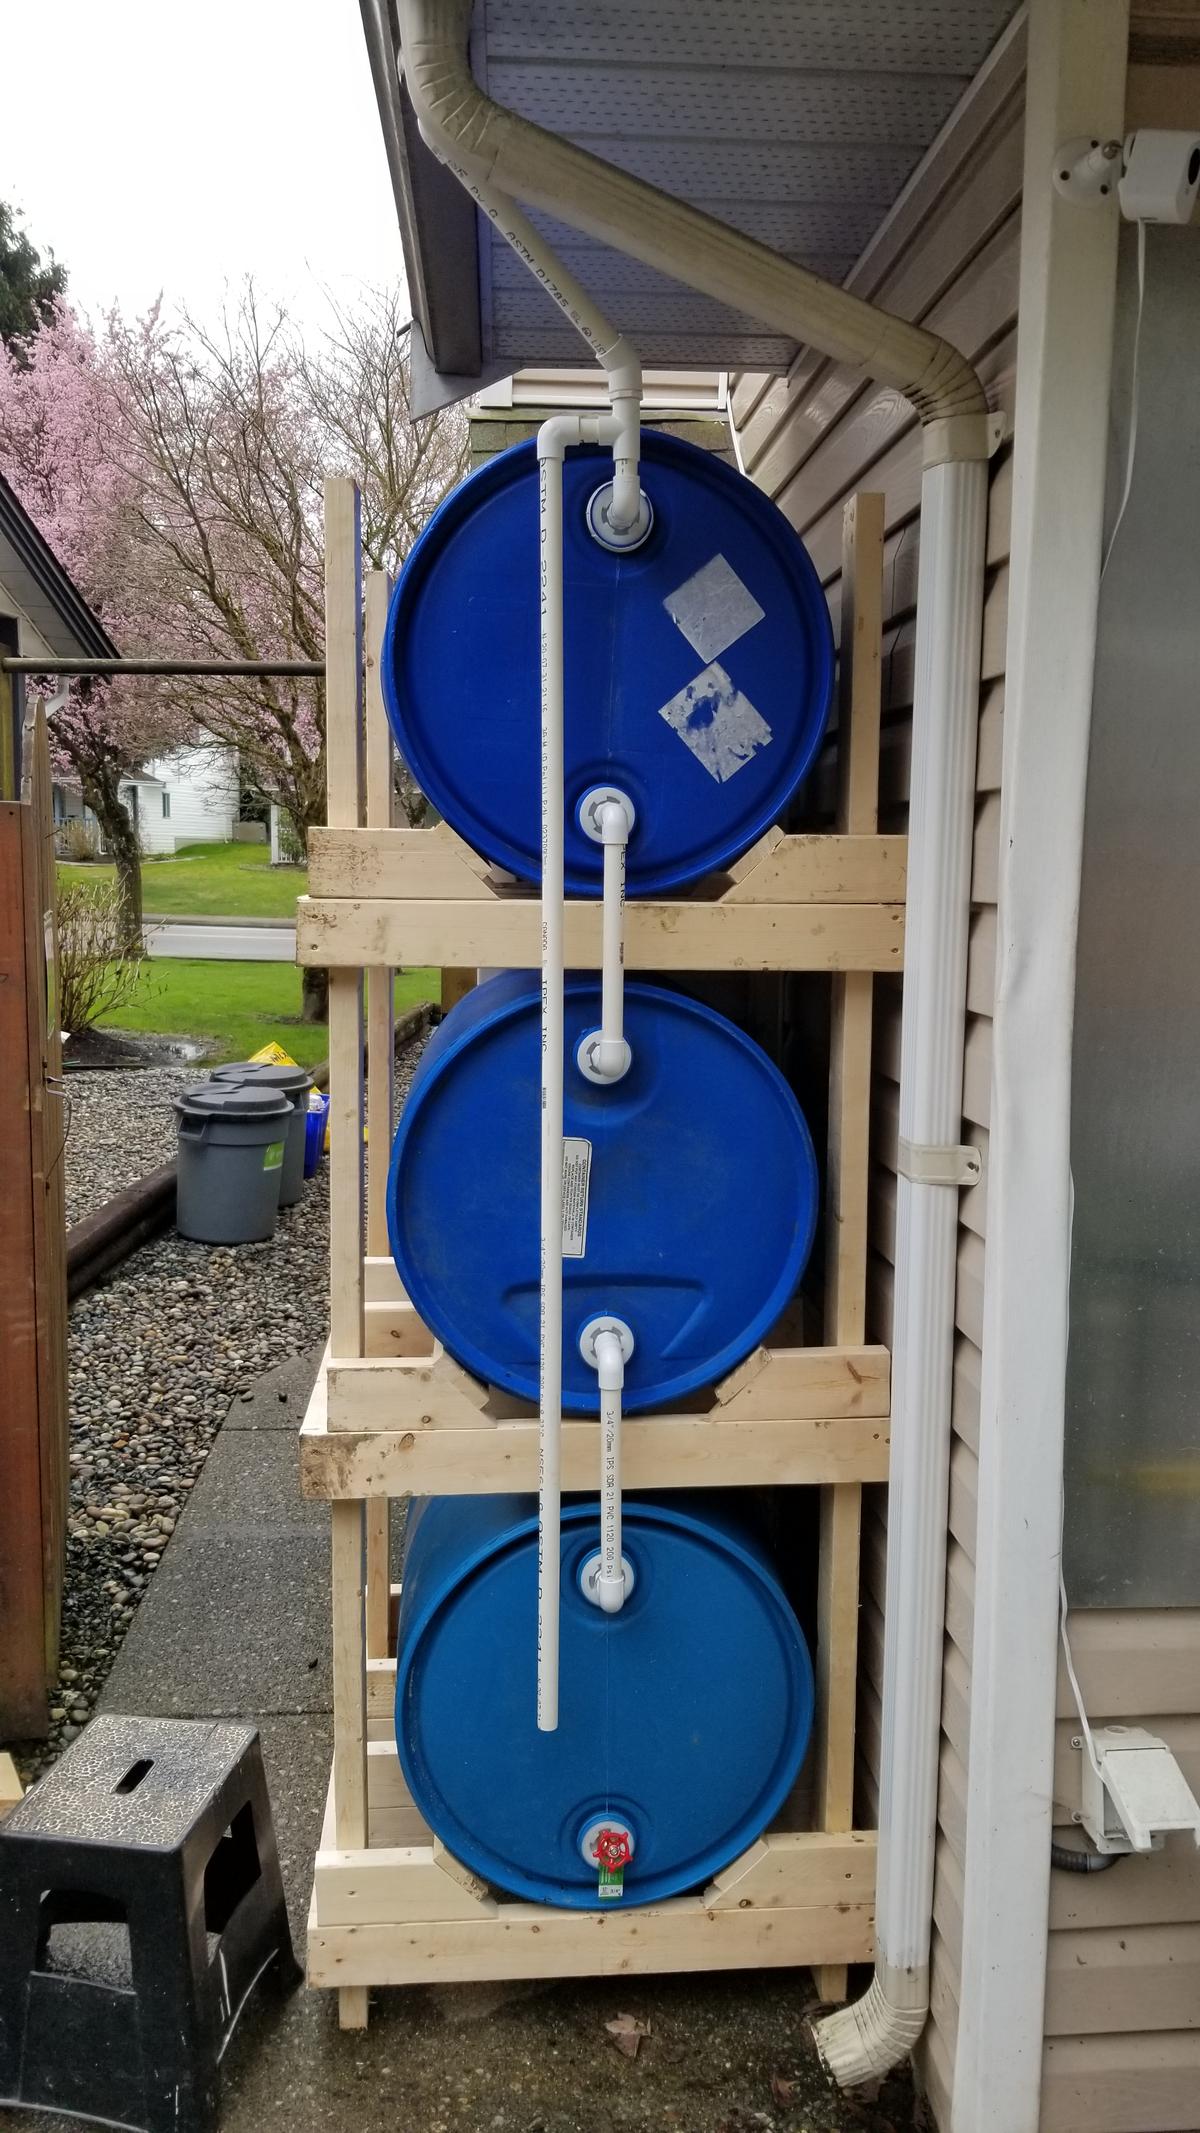 A rainwater harvesting system. (Courtesy of Michael Major)